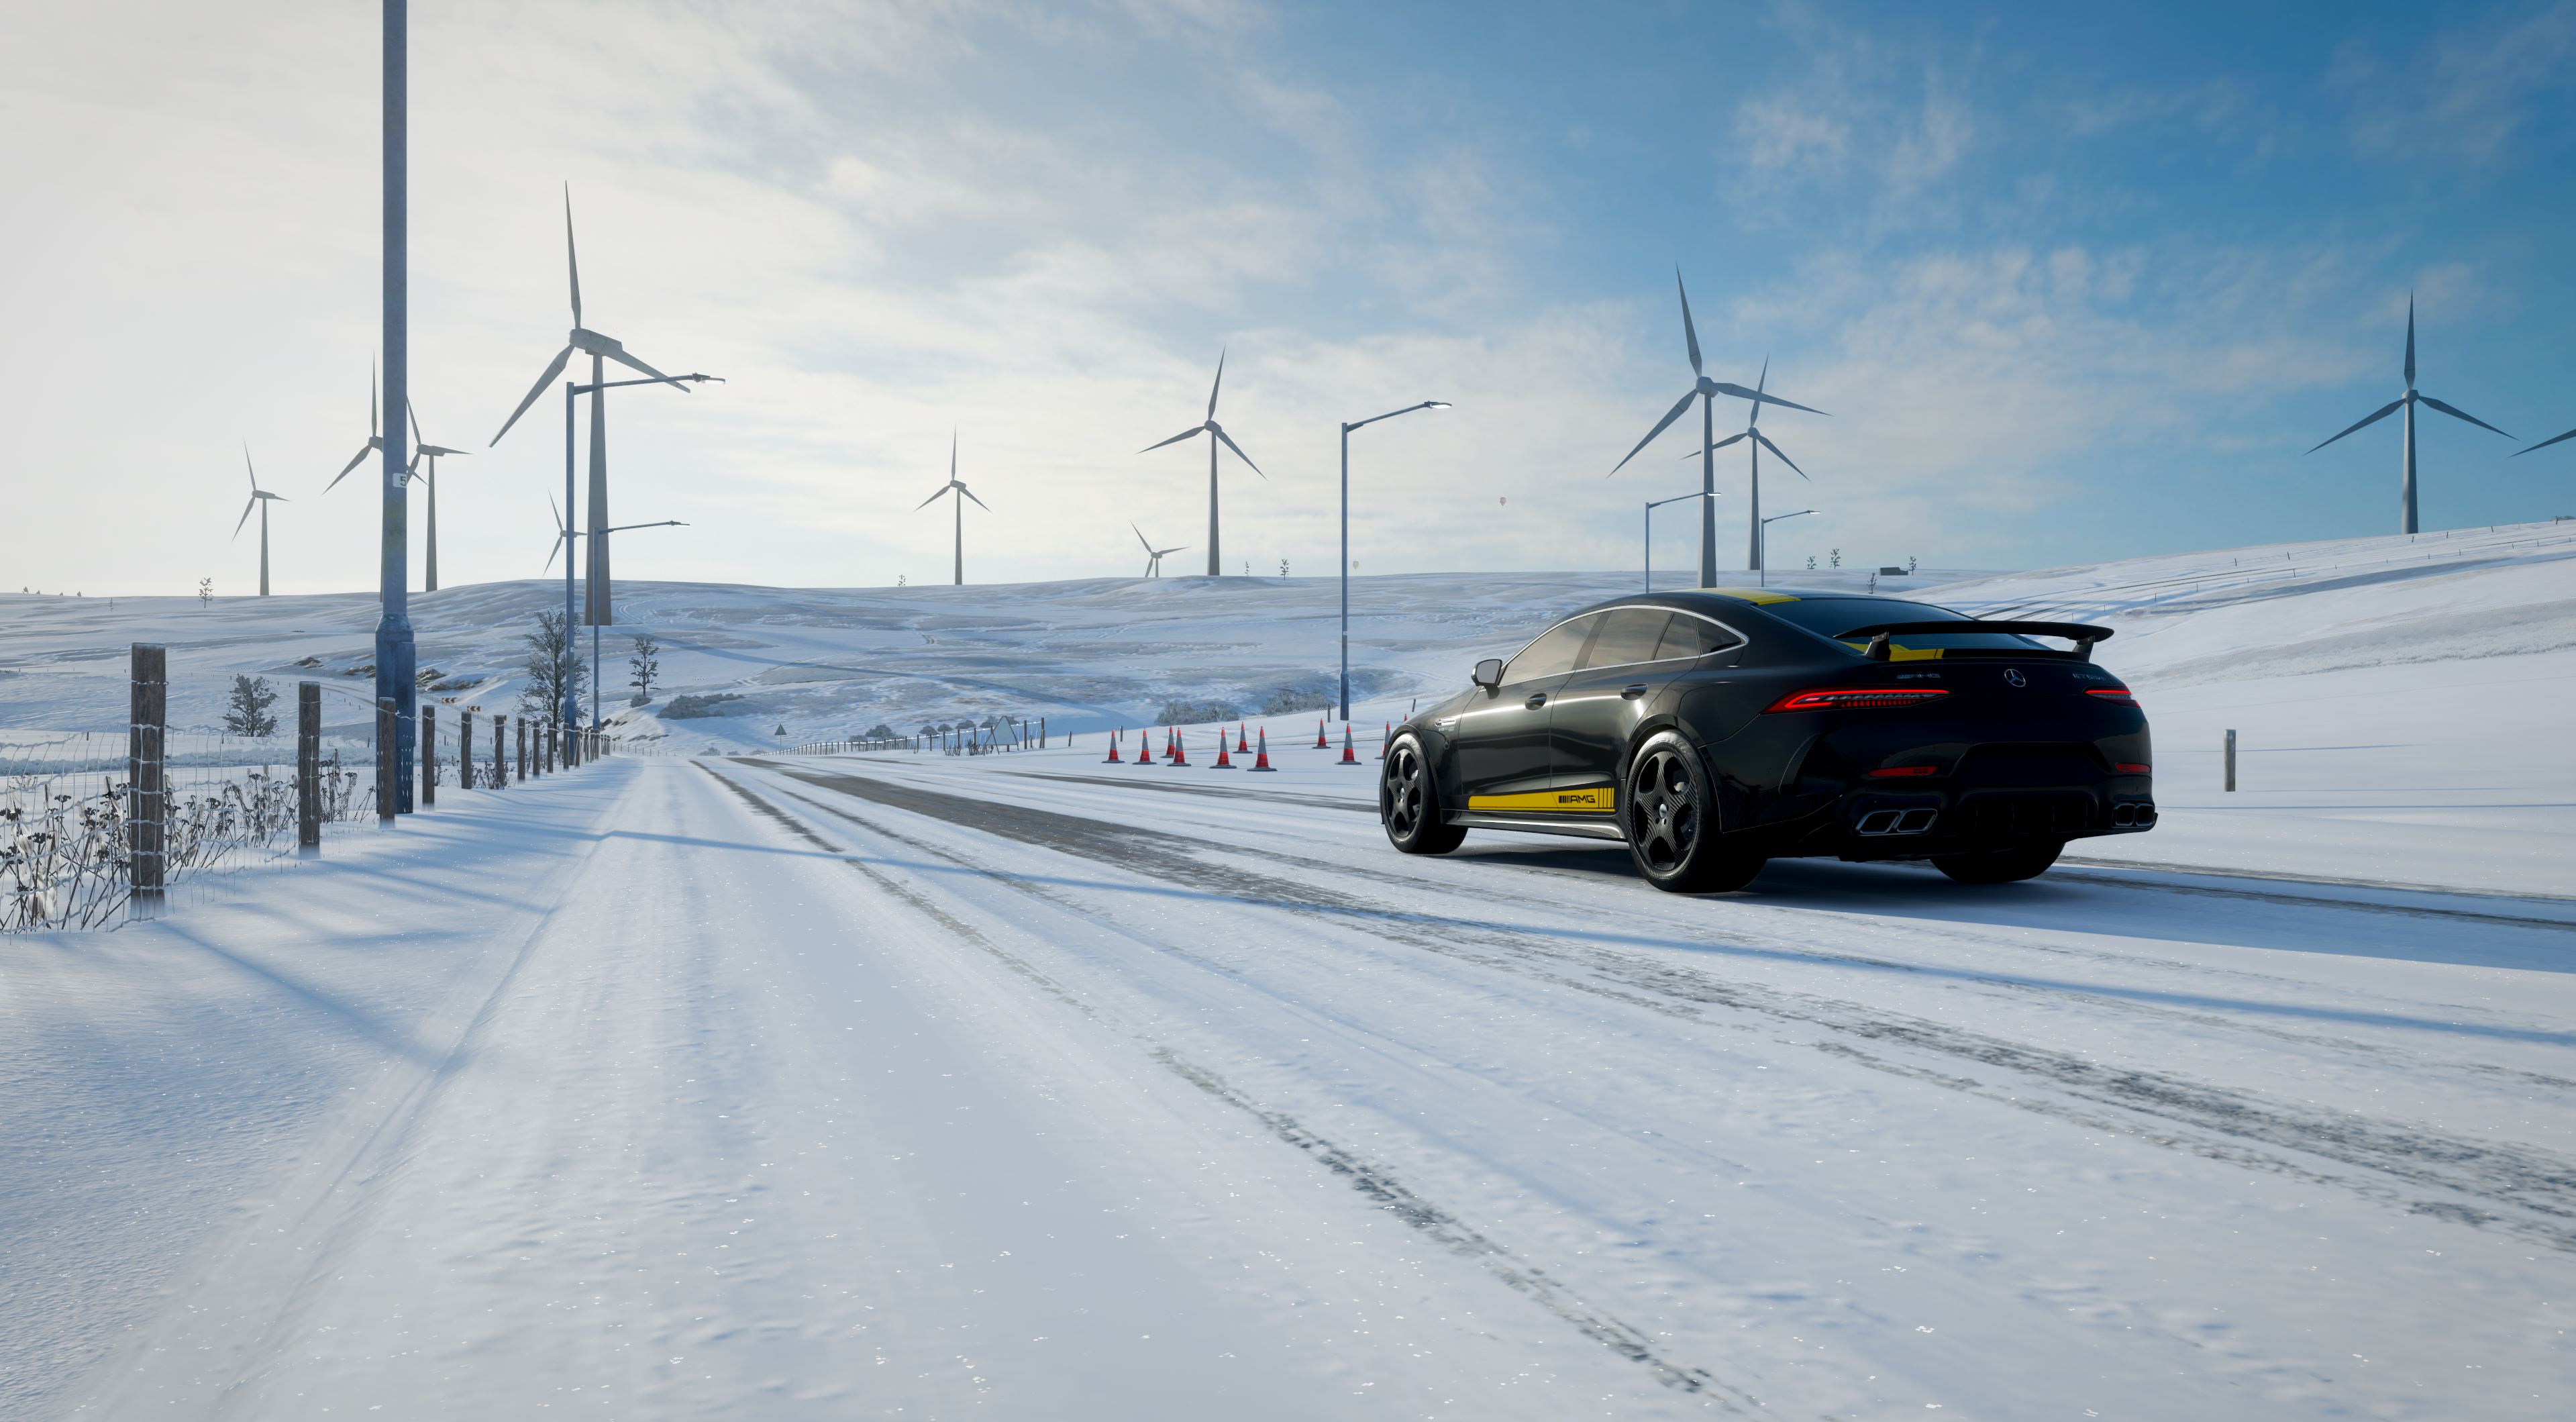 General 3839x2119 Forza Horizon 4 Mercedes-Benz Mercedes Benz GT4 snow video games screen shot wind turbine black cars car vehicle